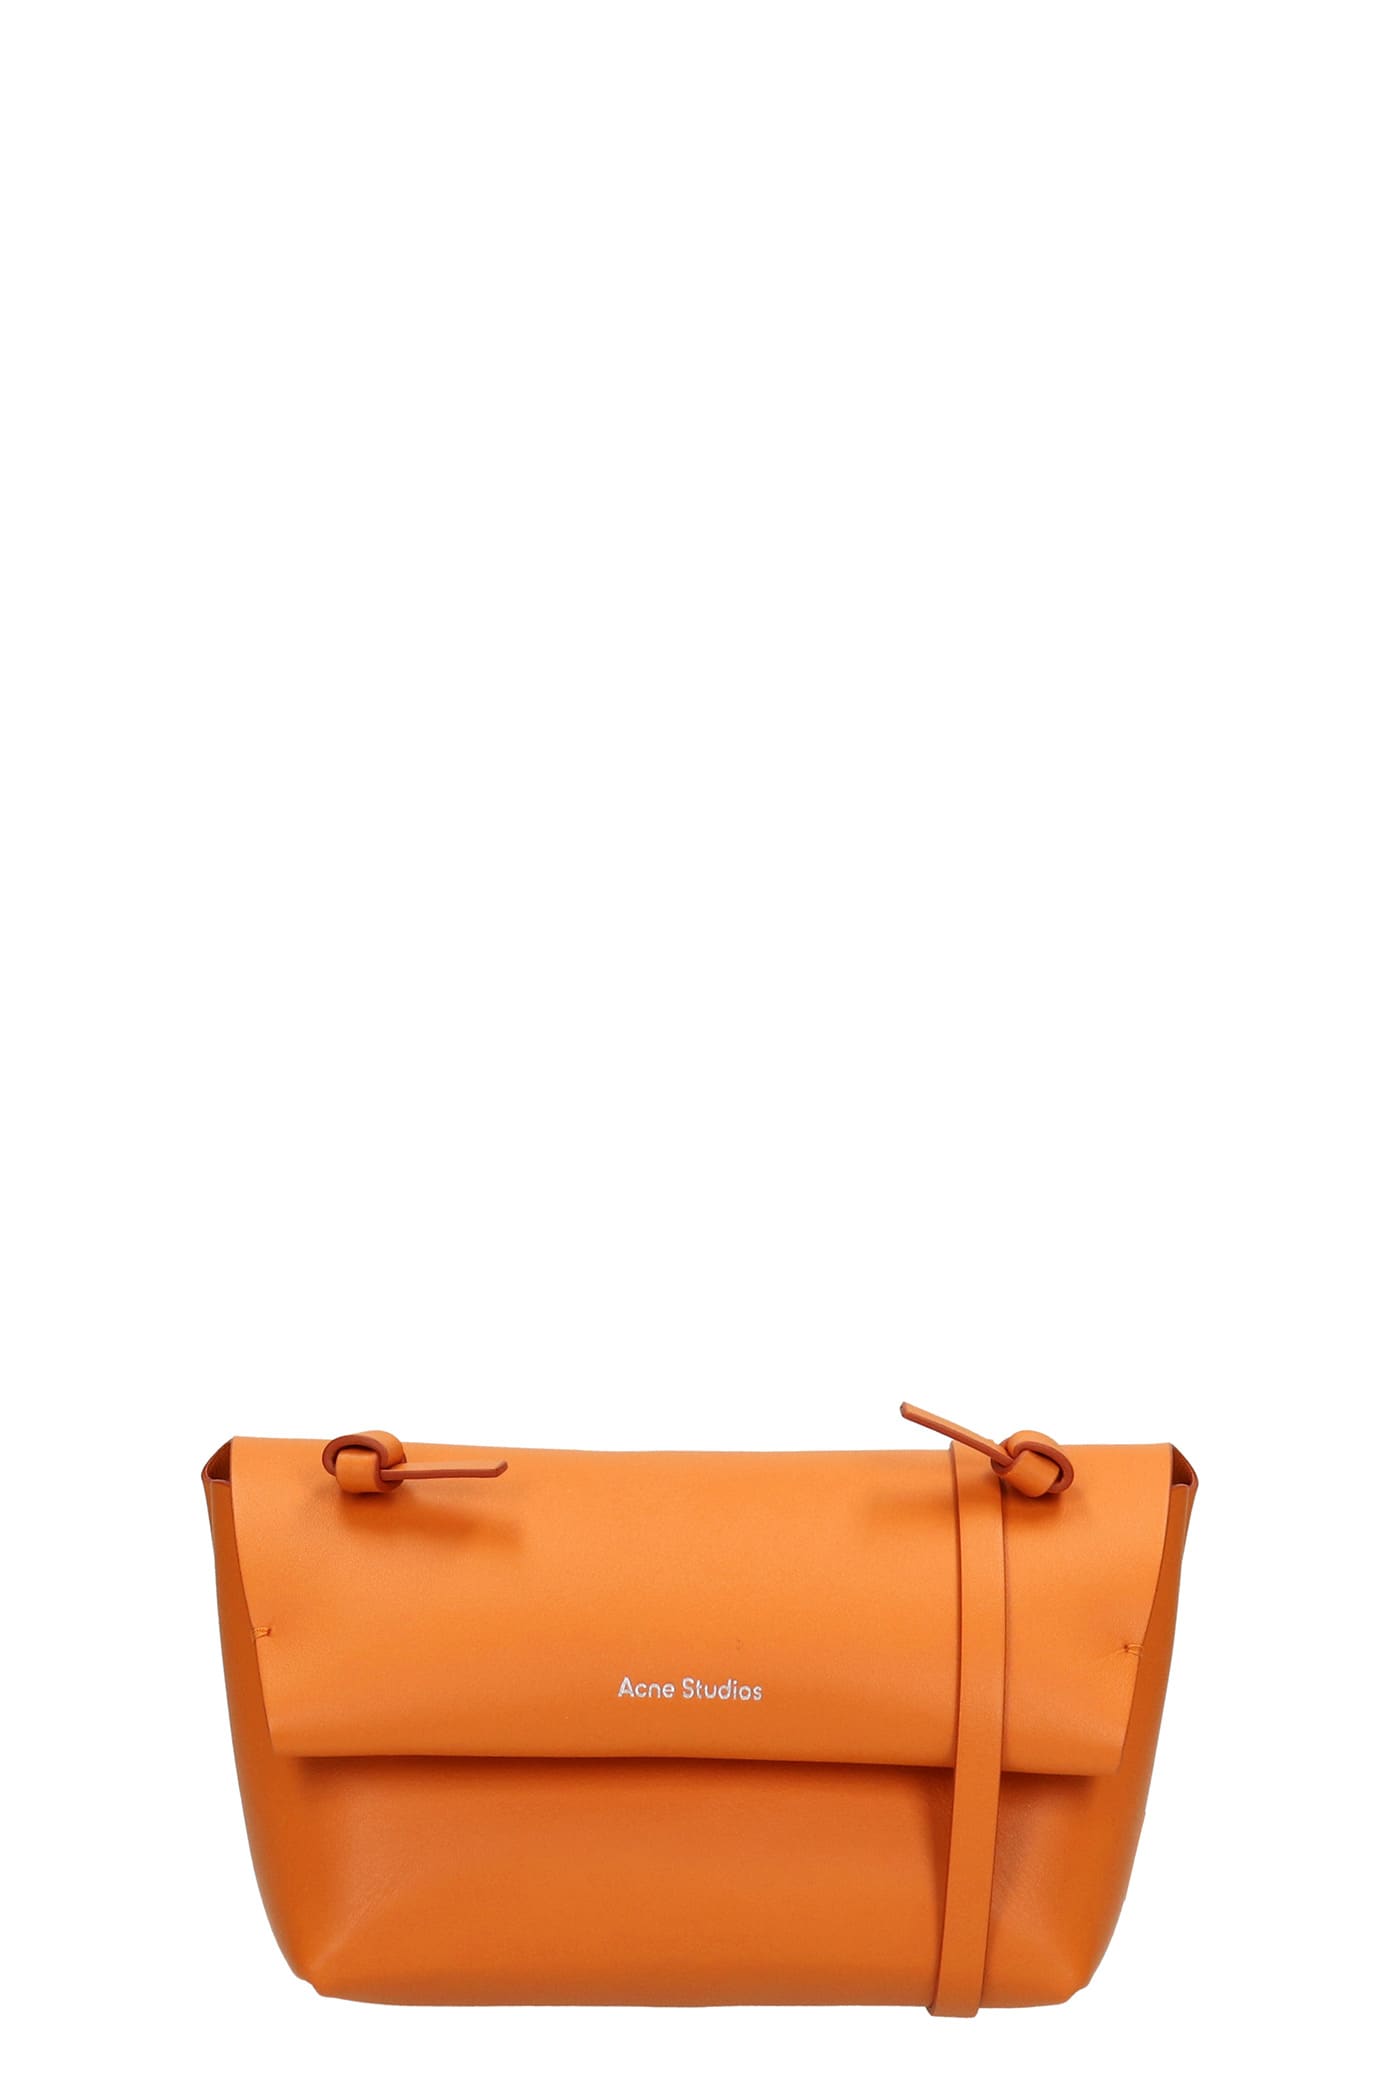 Acne Studios Alexandria Larg Shoulder Bag In Orange Leather